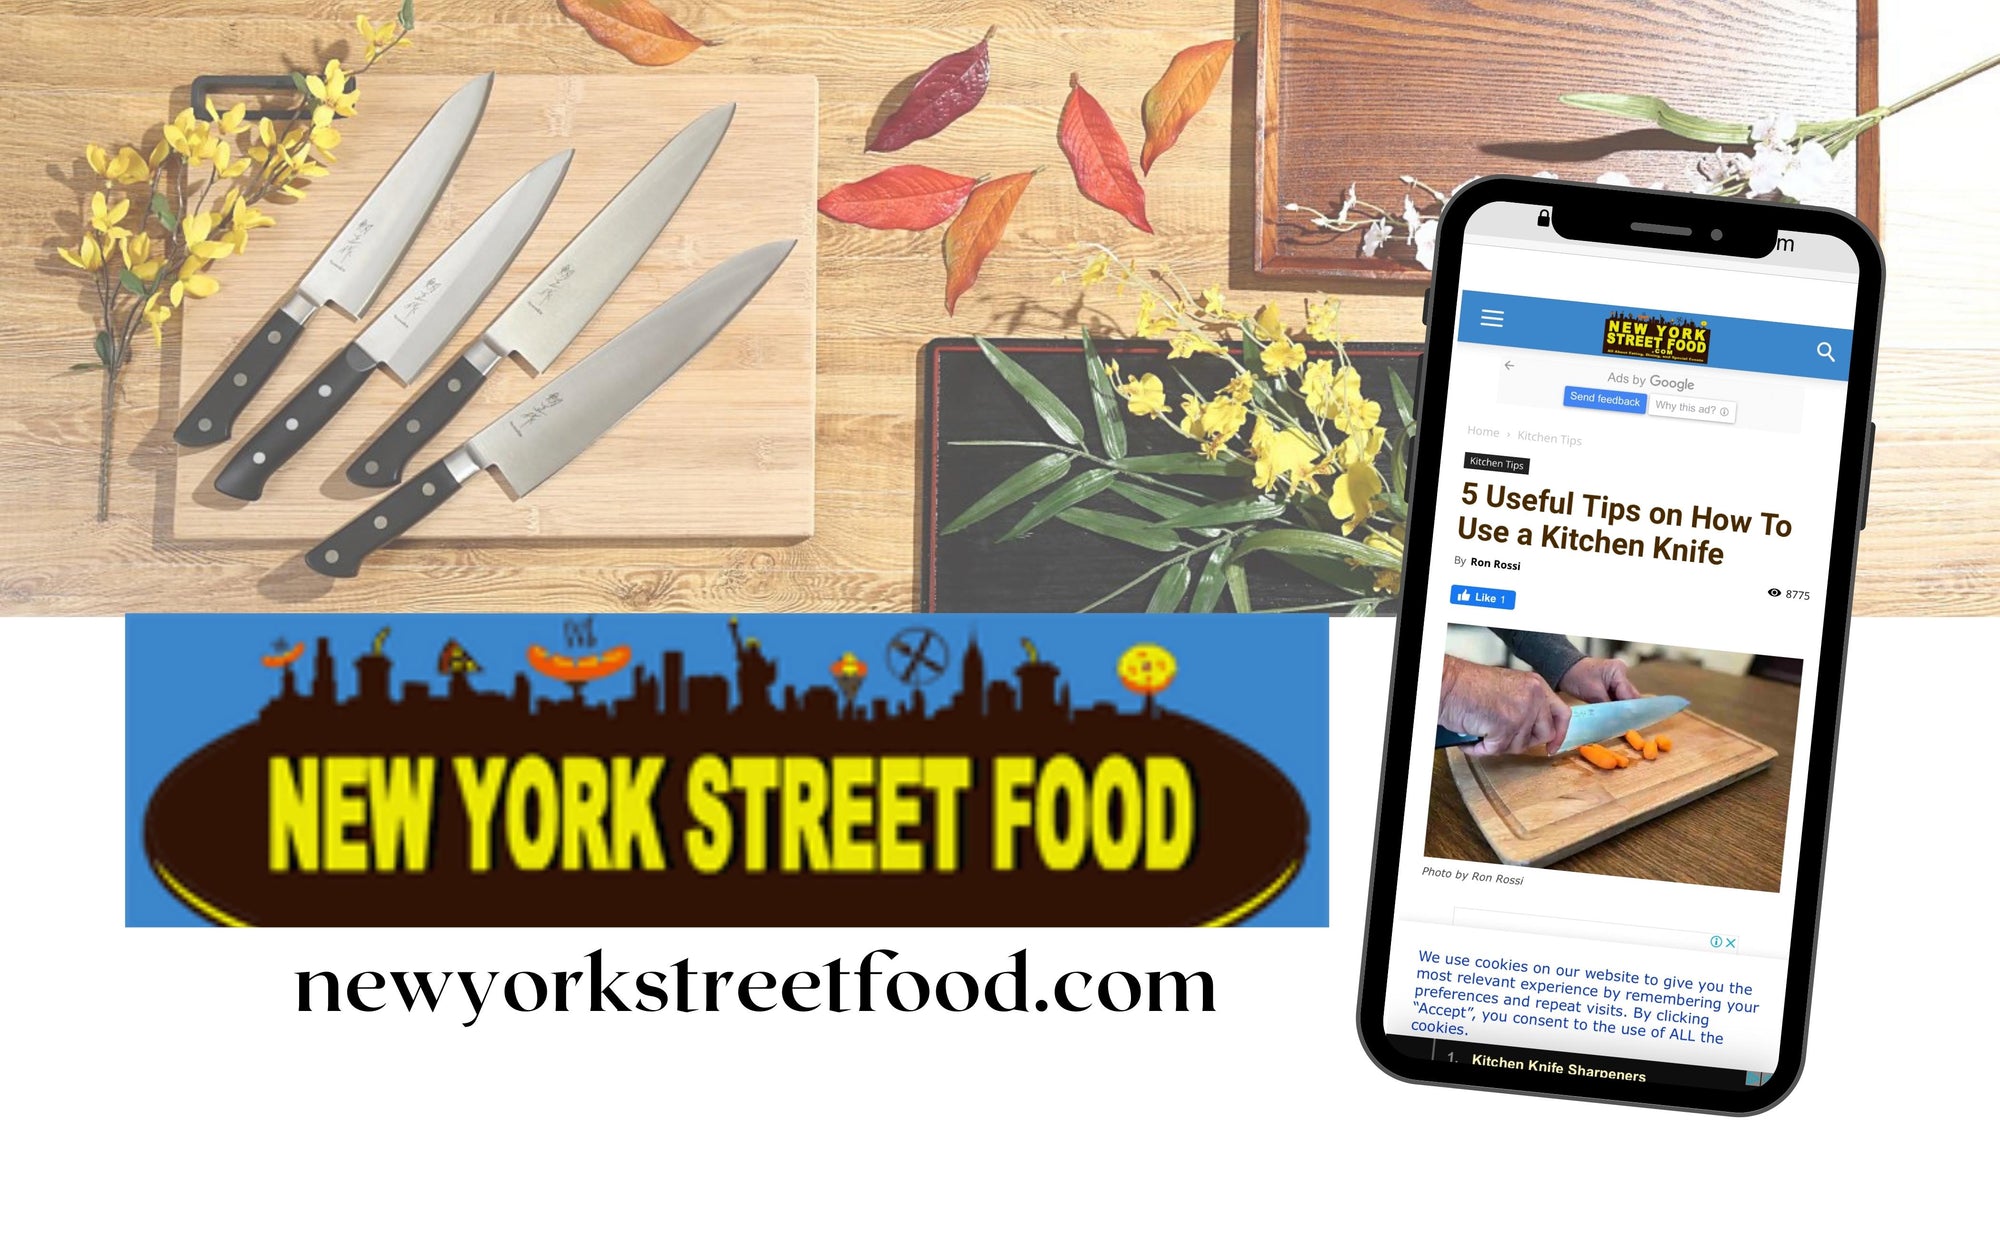 Syosaku-Japan was Featured in New York Street Food